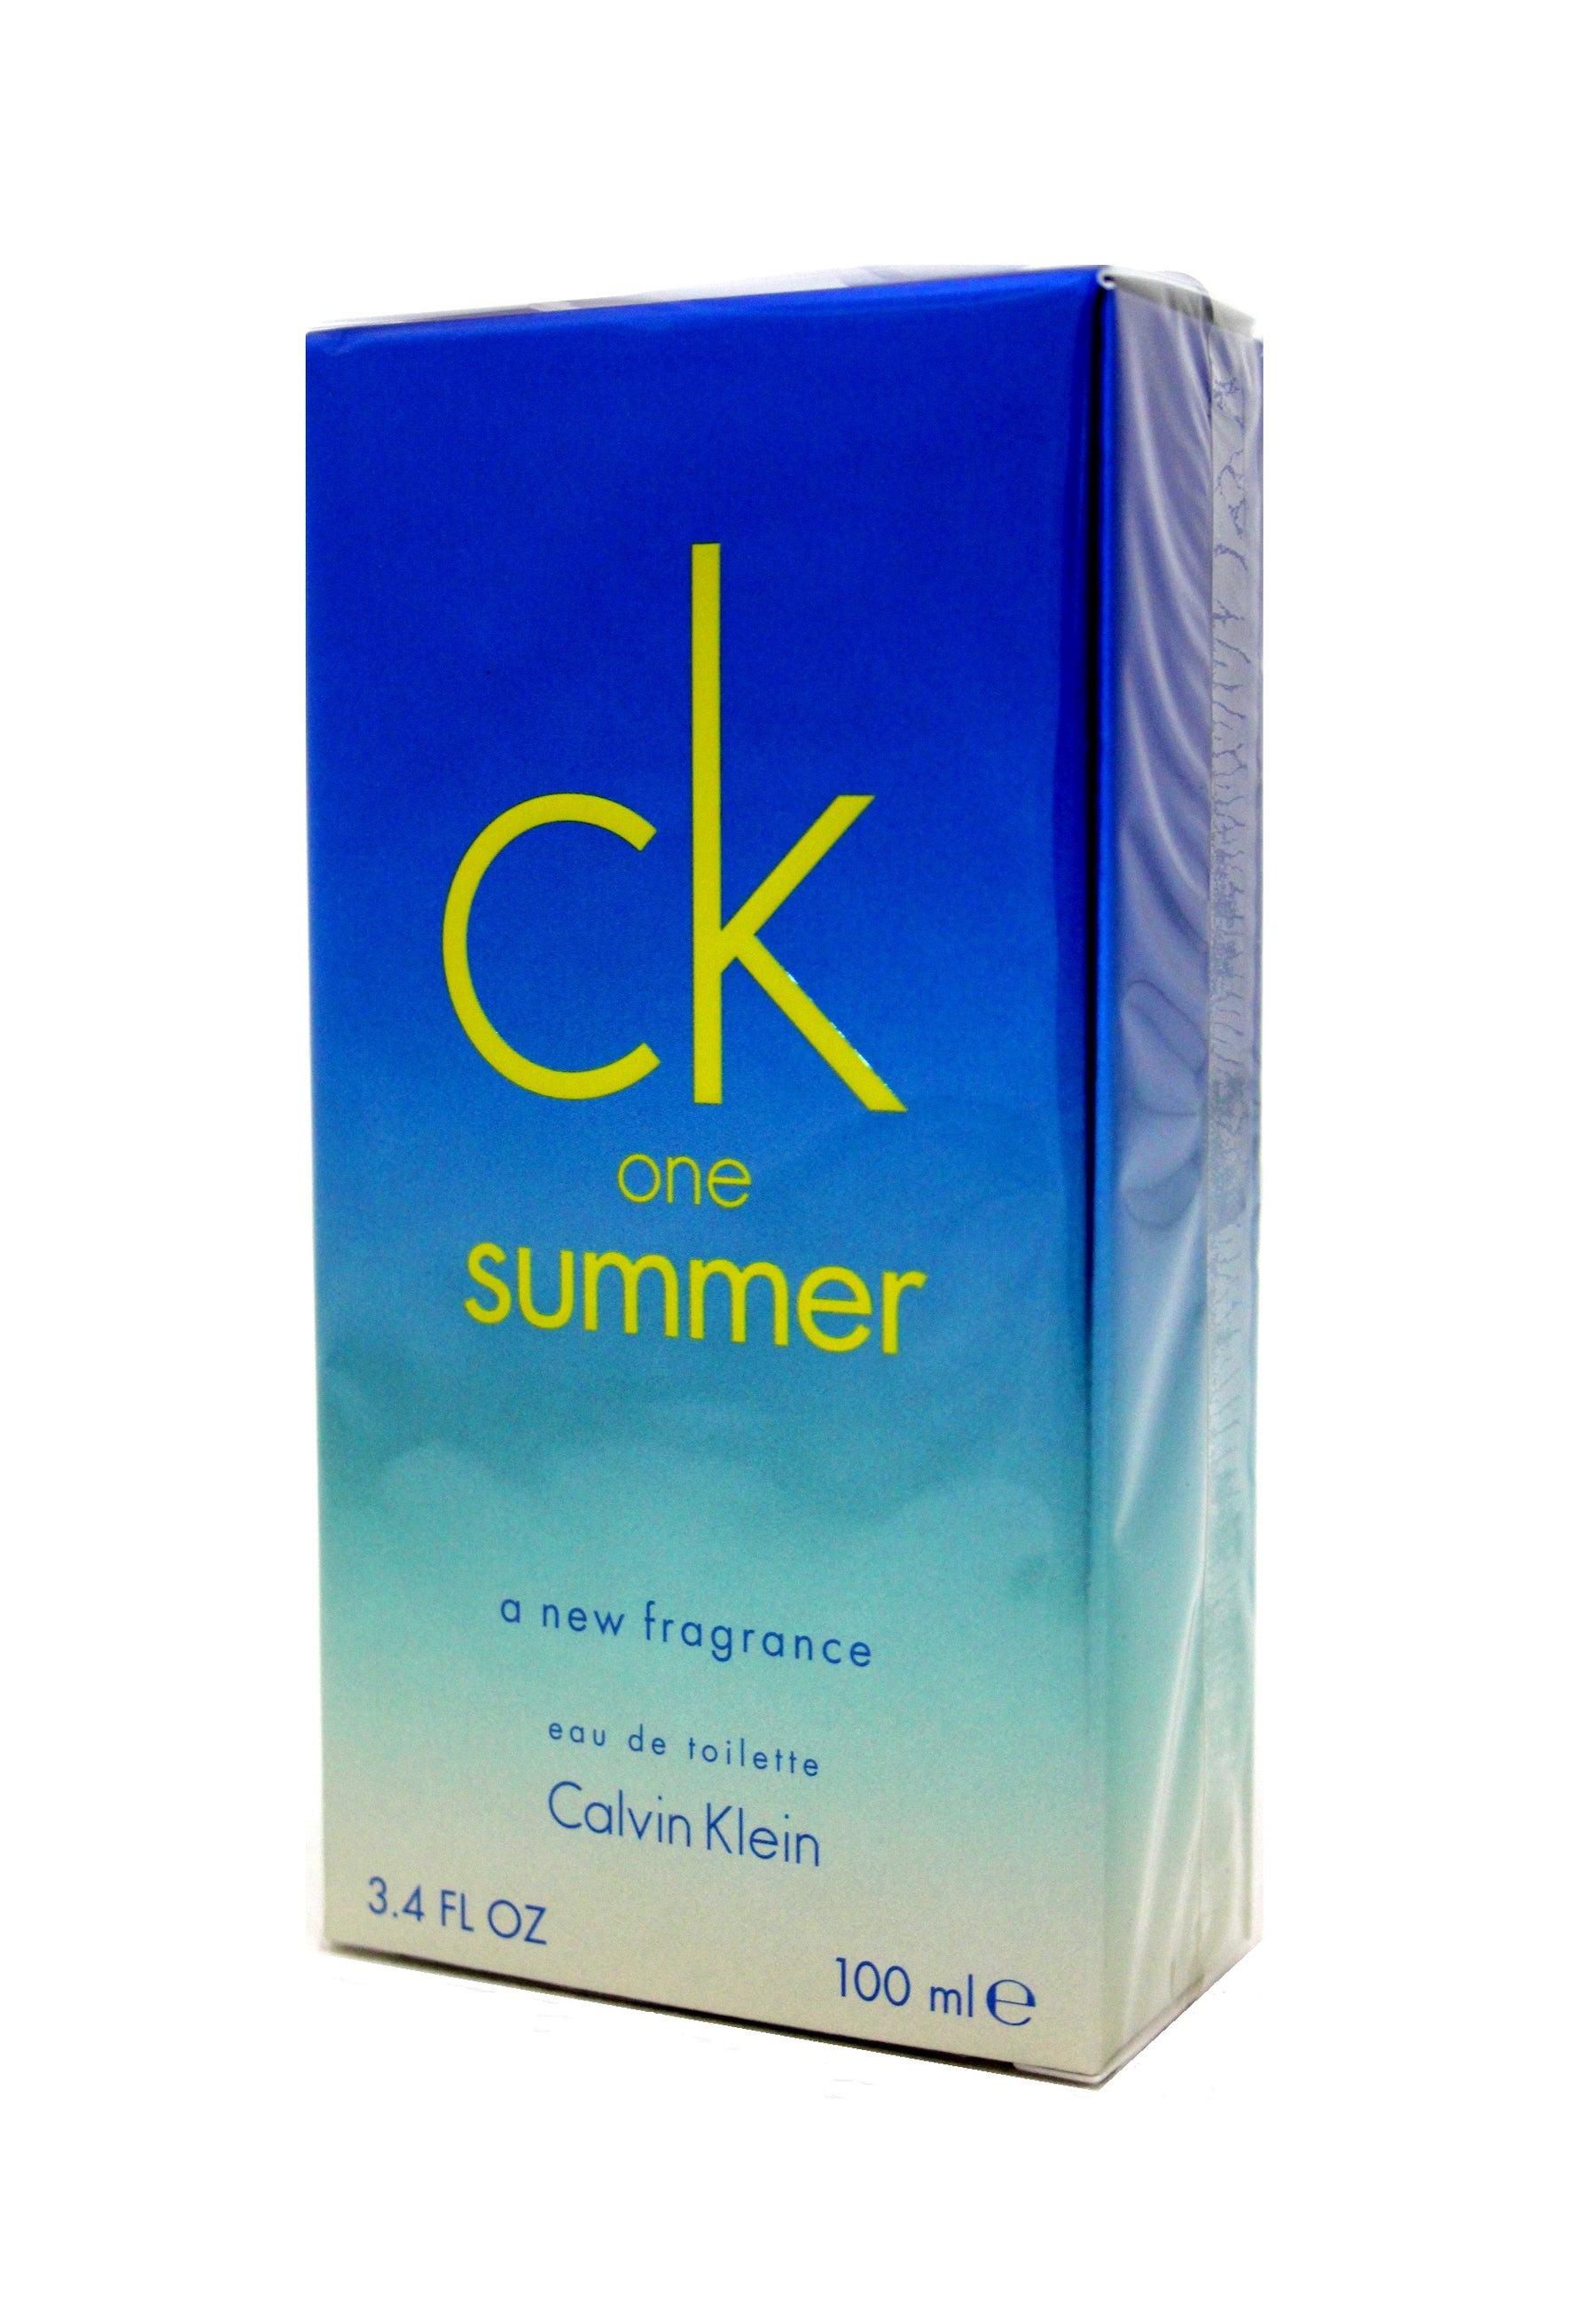 Calvin Klein CK One Summer 2015 Eau de Toilette 100 ml